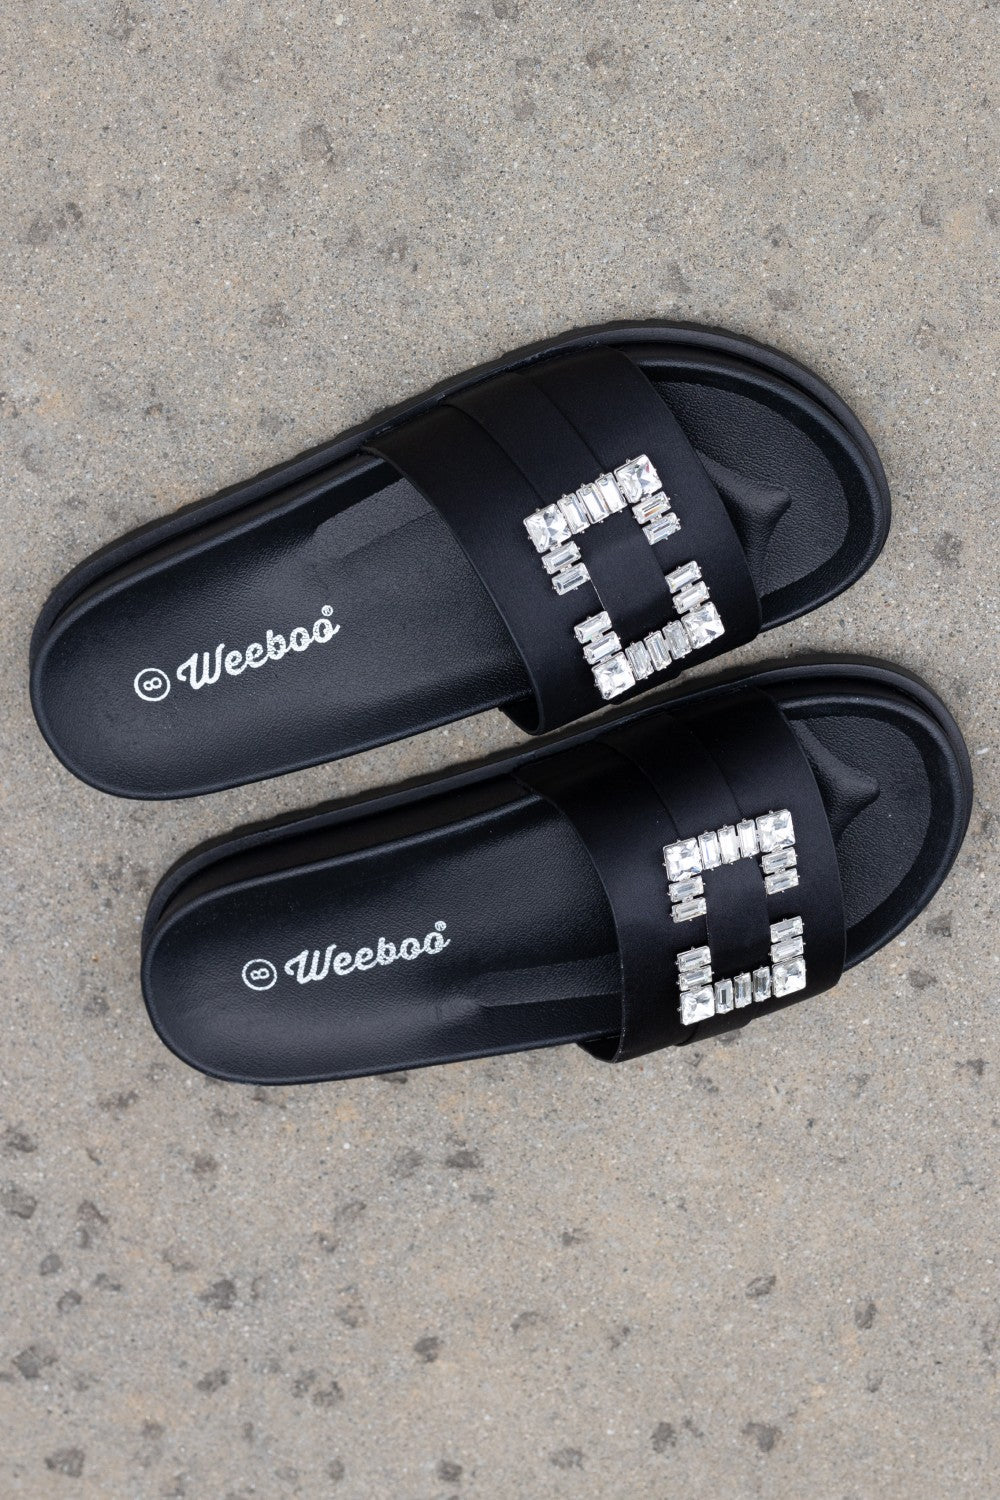 Weeboo Crystal Skies Rhinestone Buckle Slide Sandals - Only Size 7.5 Left